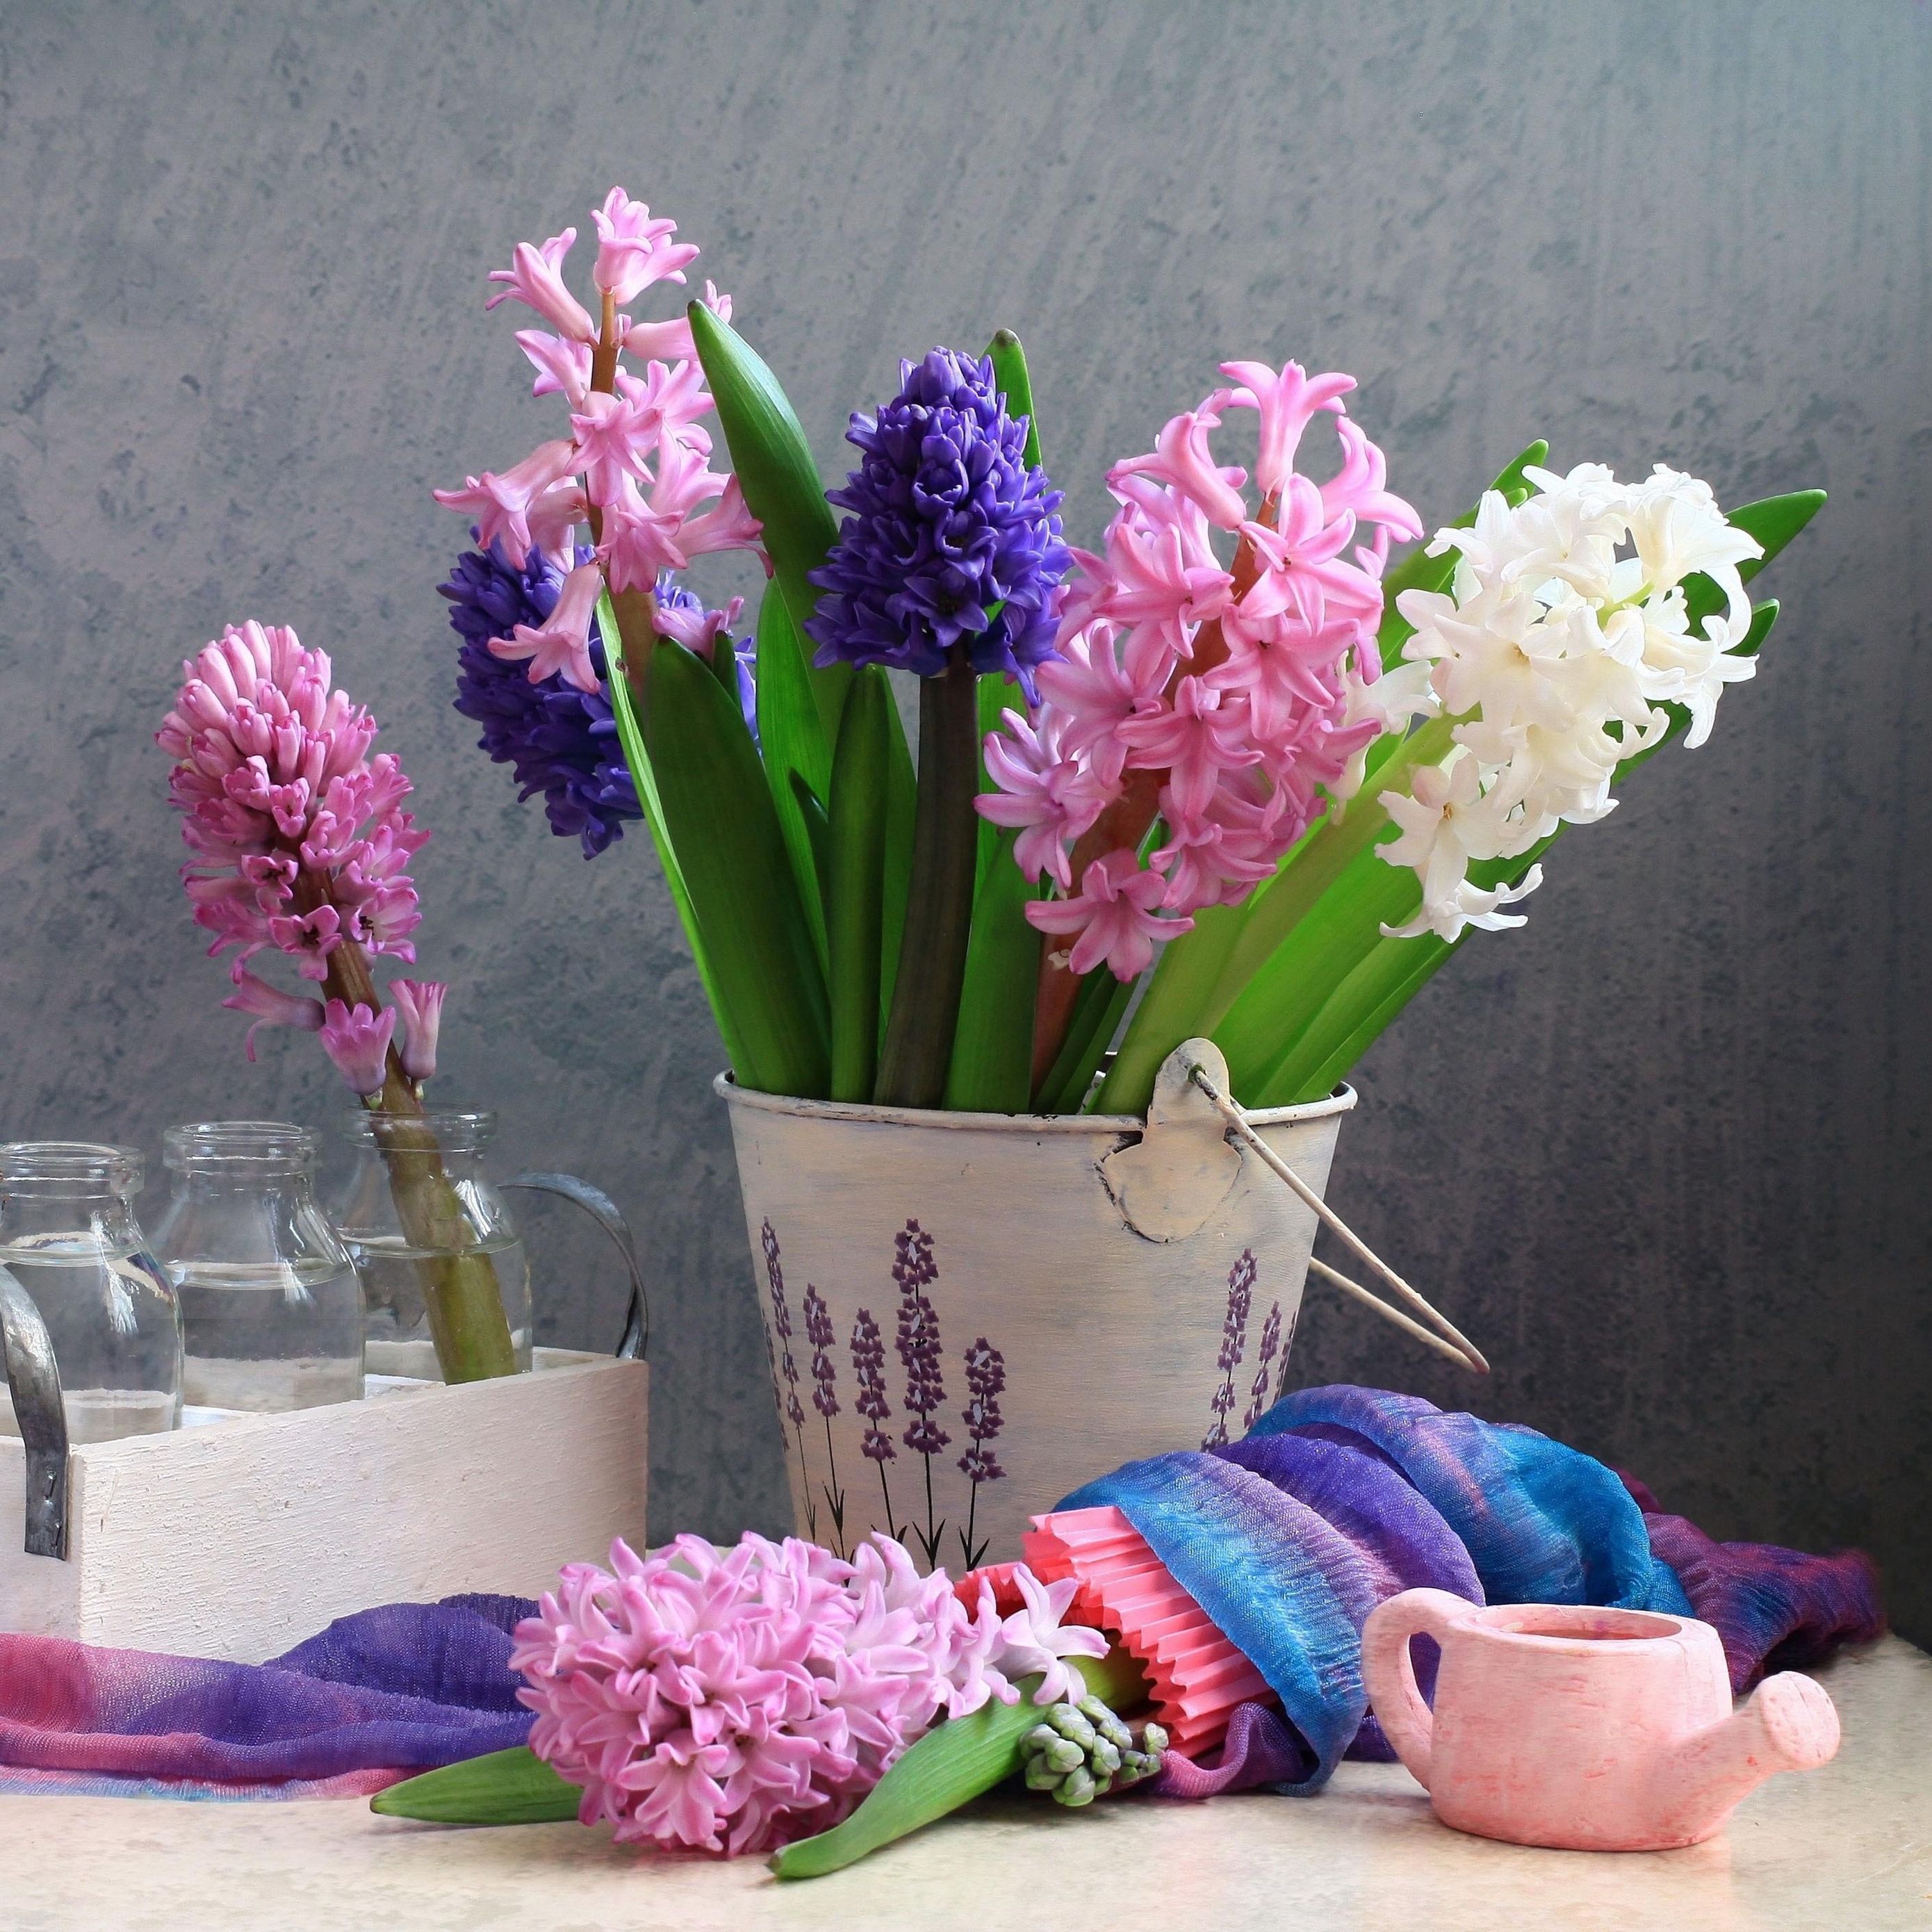 Download wallpaper 2780x2780 hyacinths, flower, spring, bucket